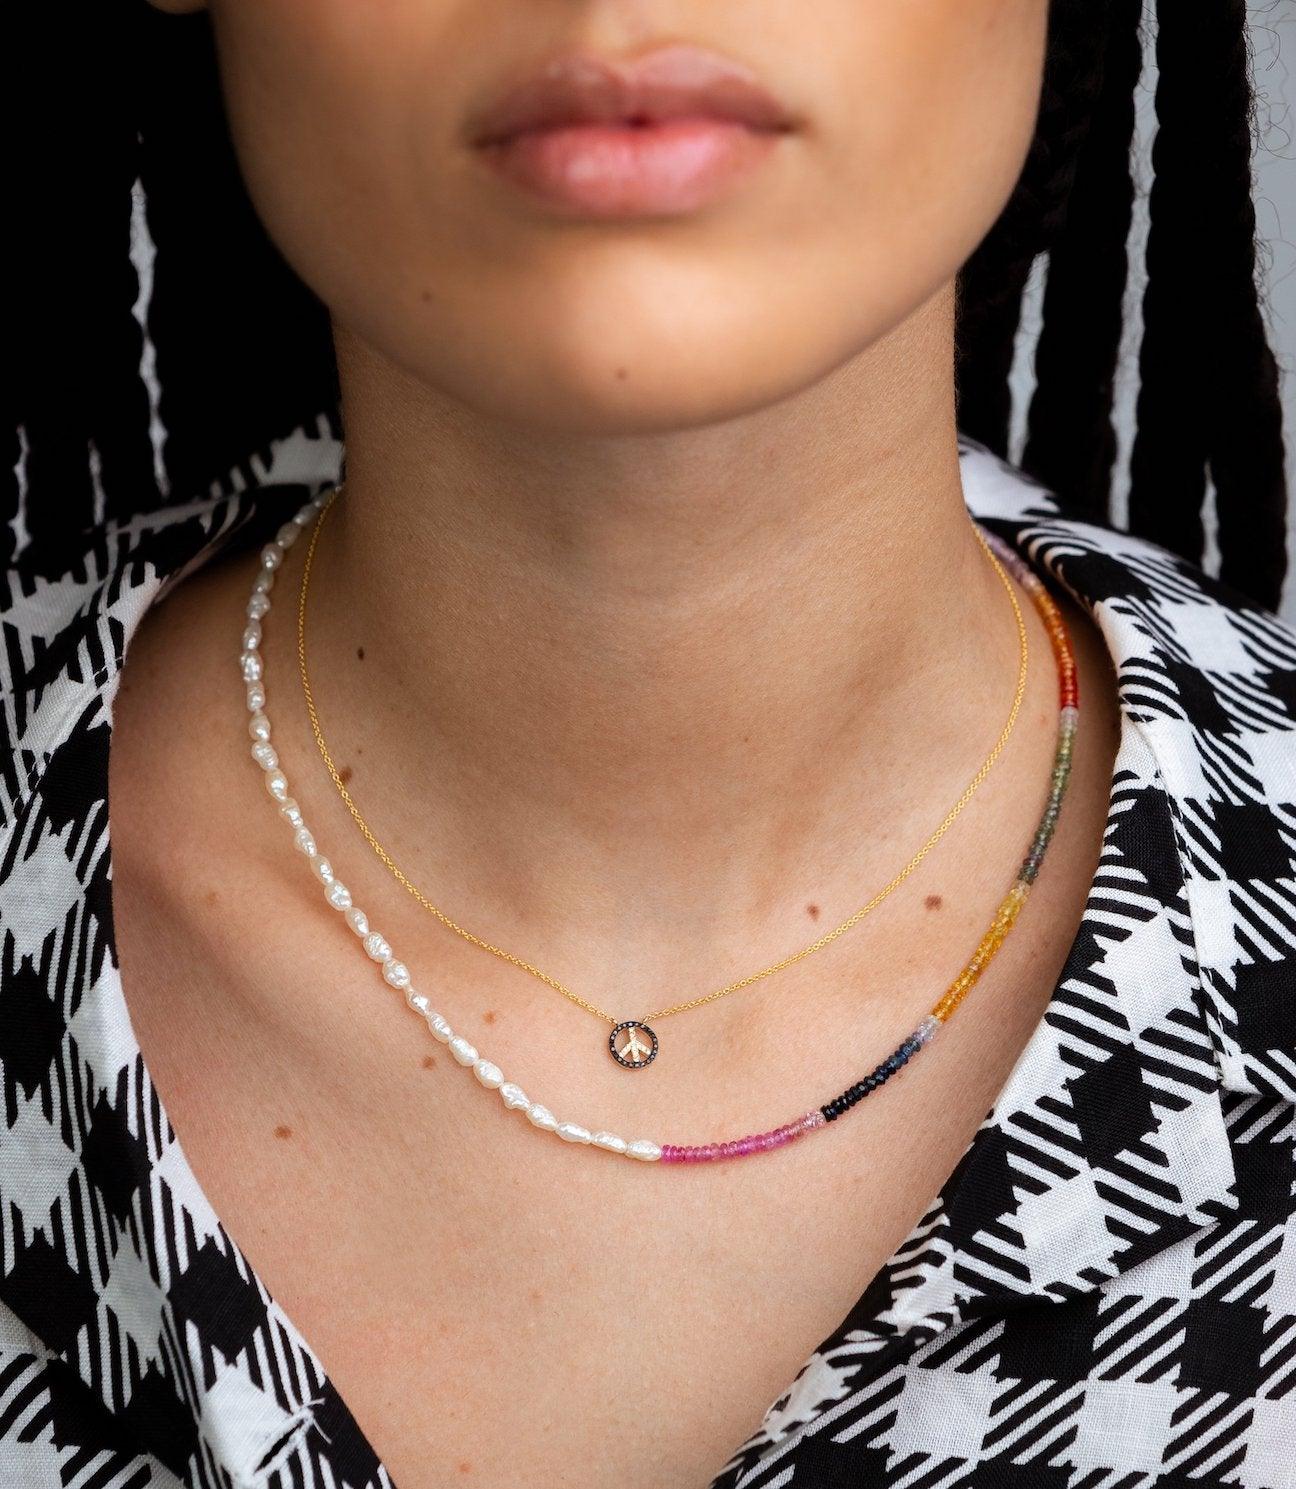 Beautiful 99-Pearl Double Strand Necklace in SWG - $15K Appraisal Value w/  CoA! }